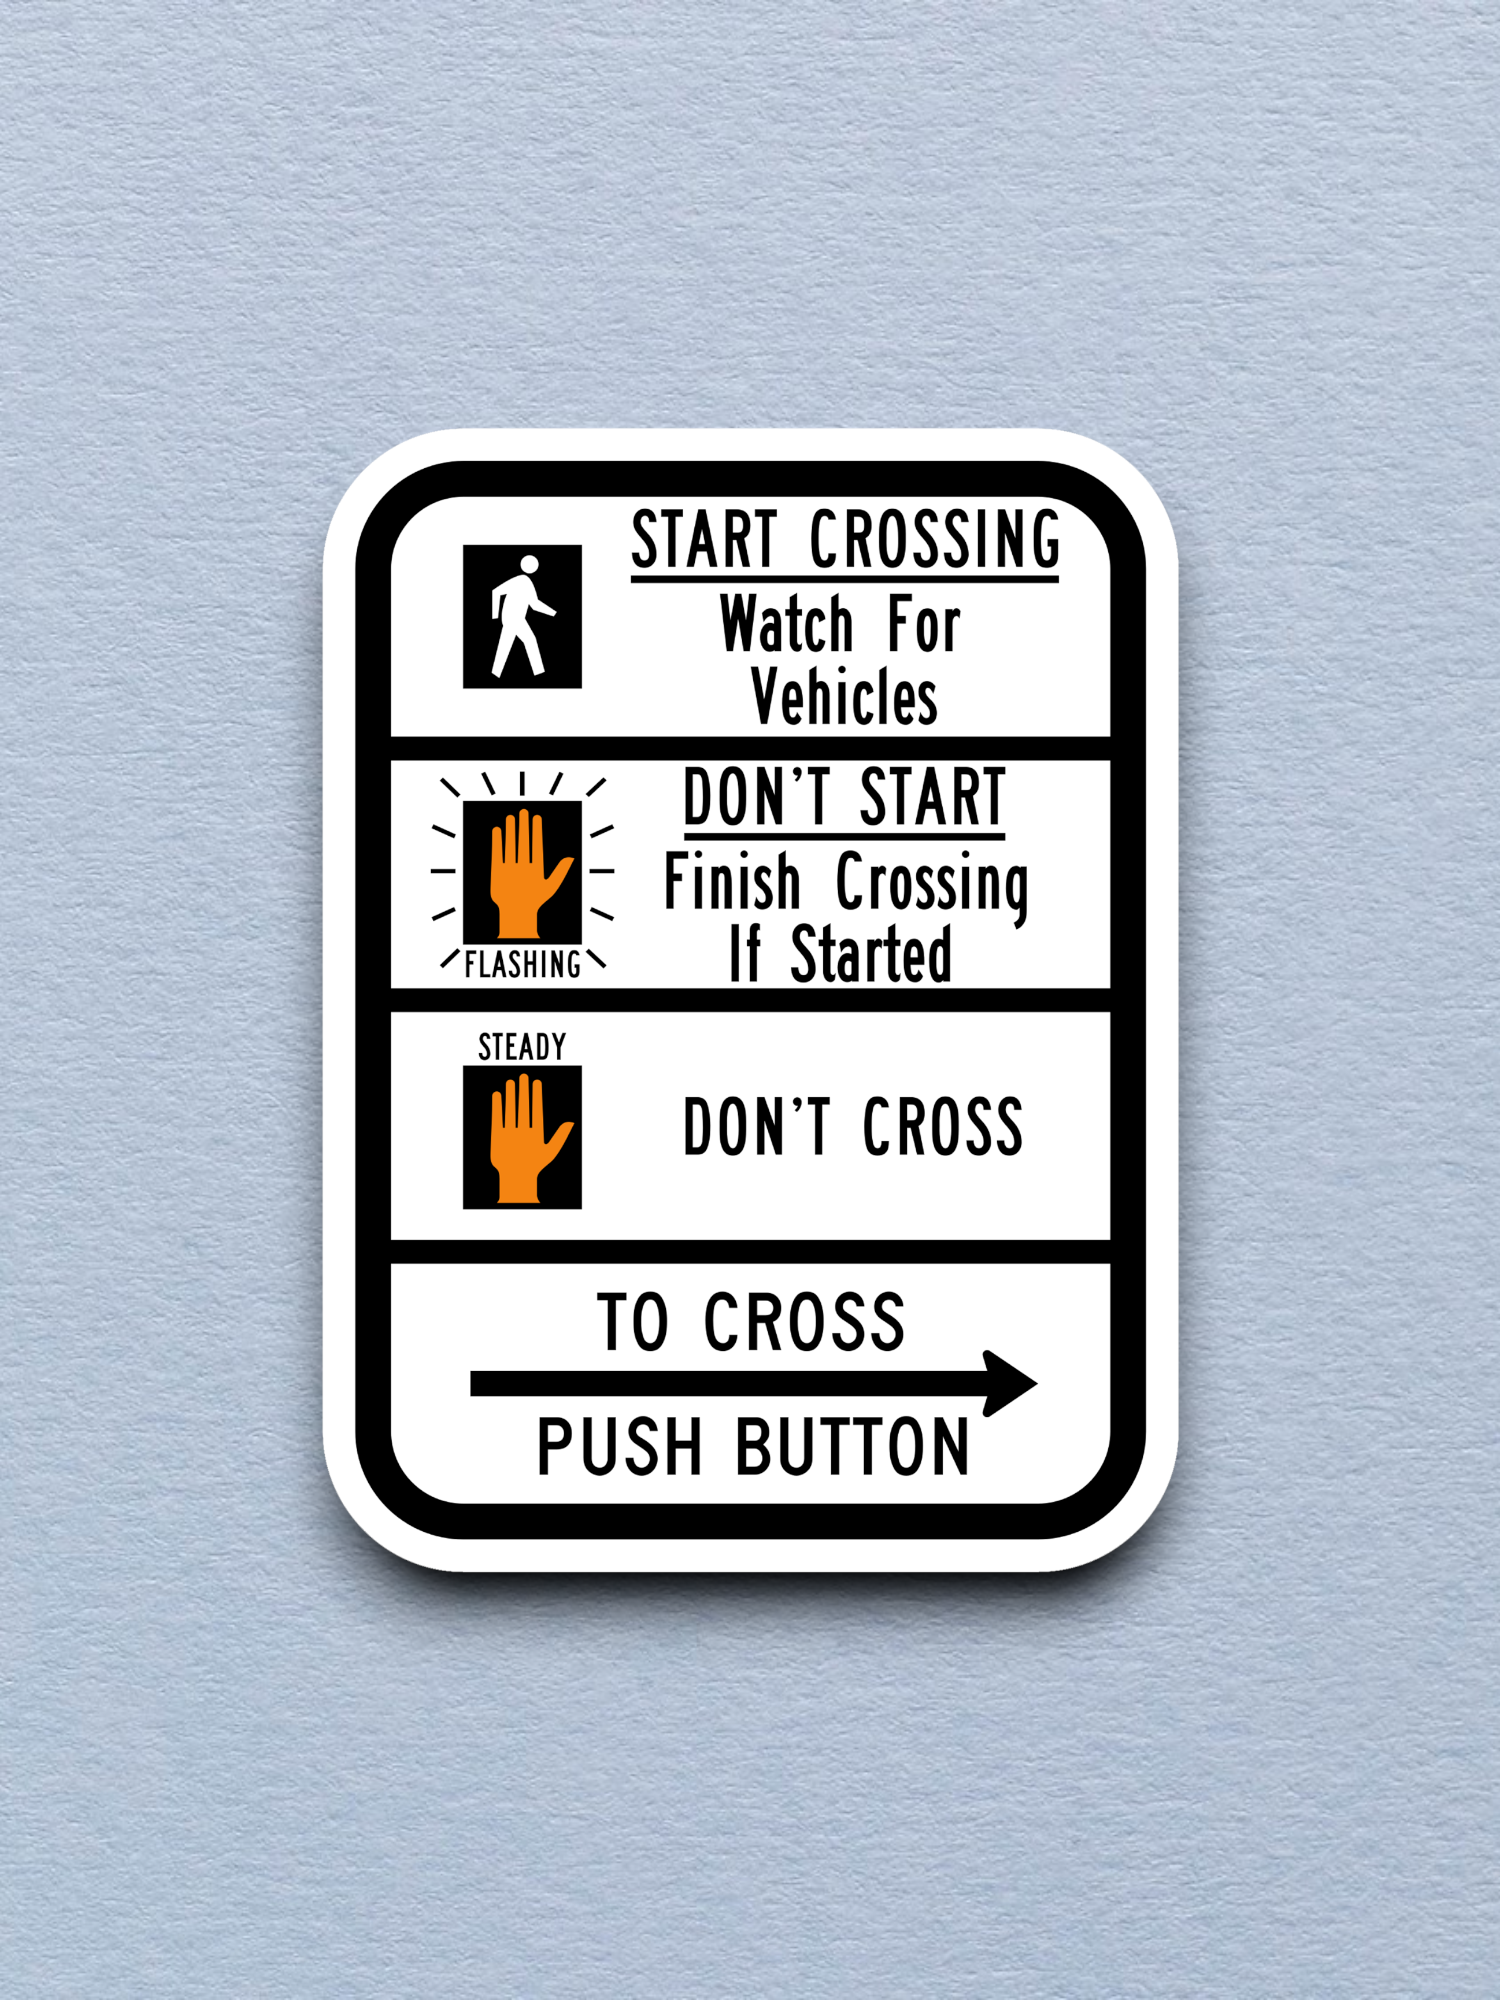 Crosswalk signal instructions United States Road Sign Sticker